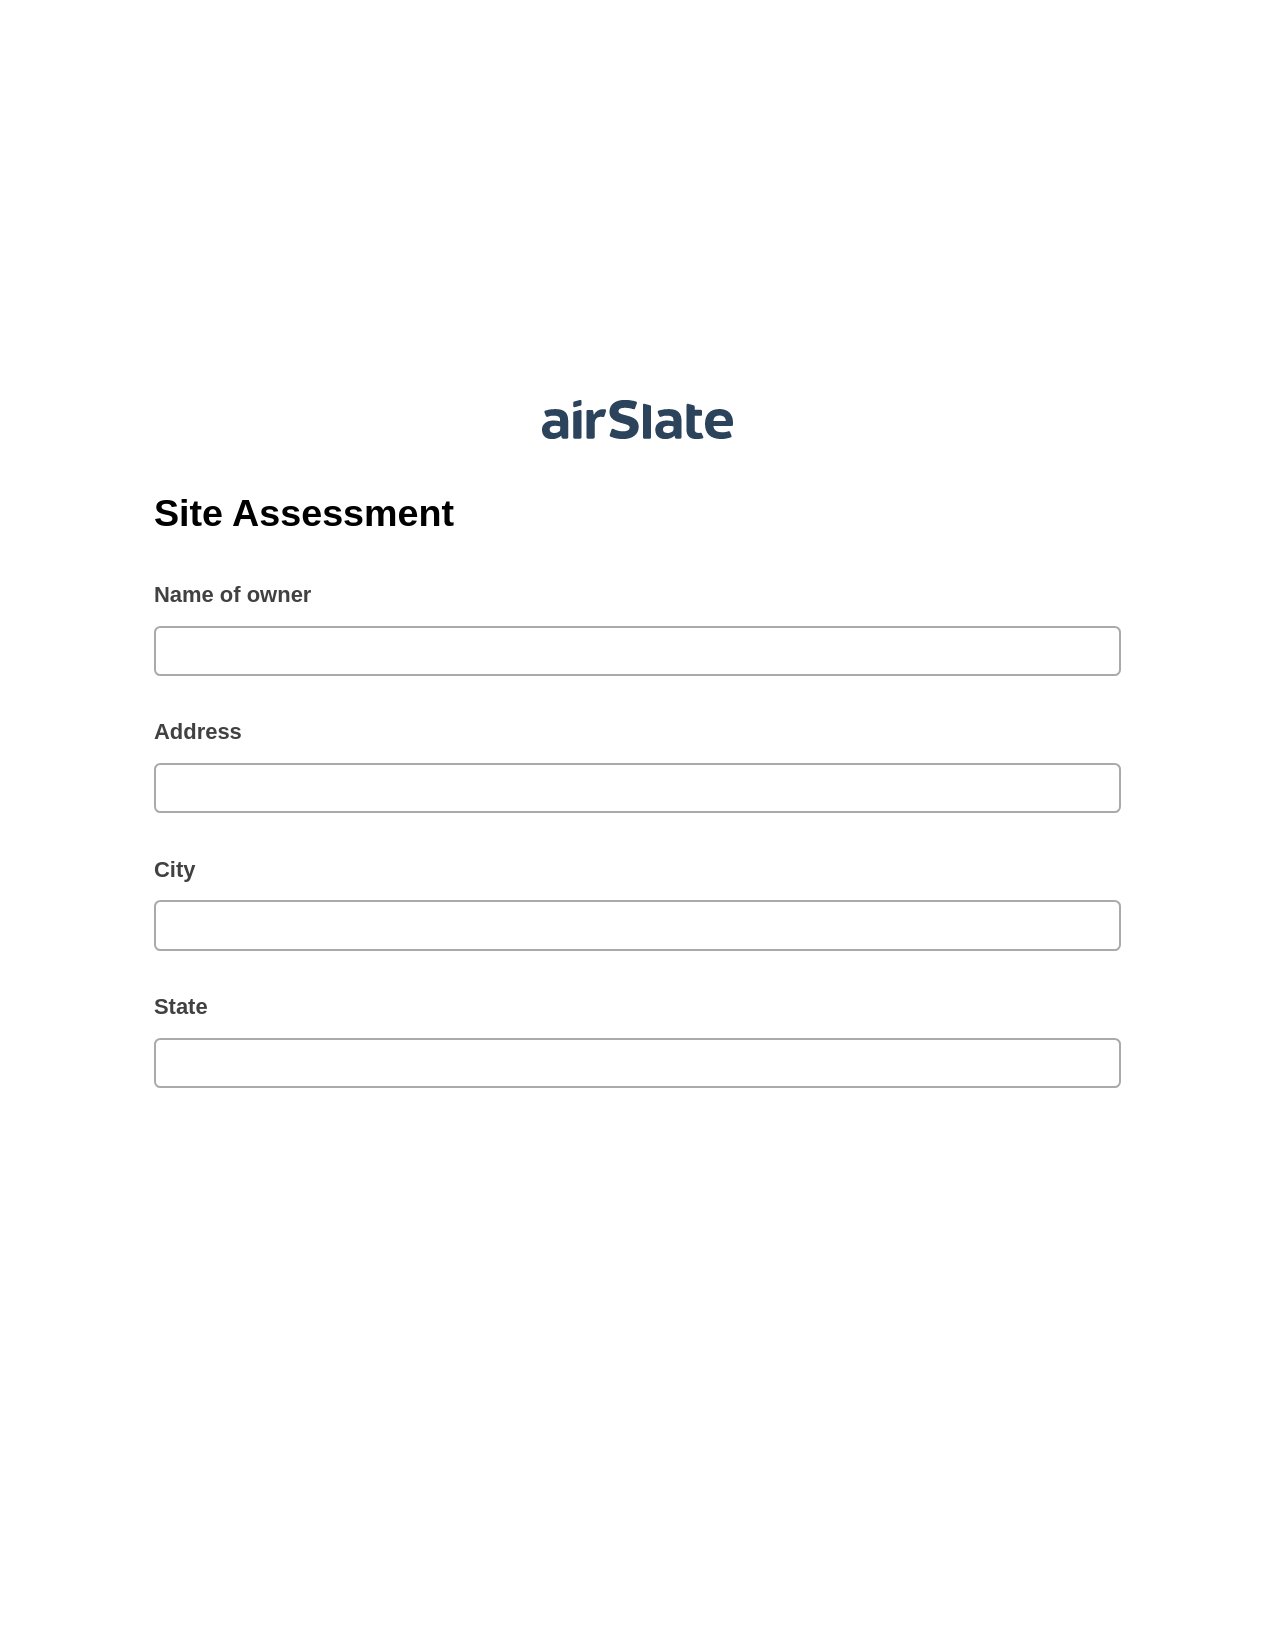 Site Assessment Pre-fill from Google Sheets Bot, Slack Notification Bot, Box Bot